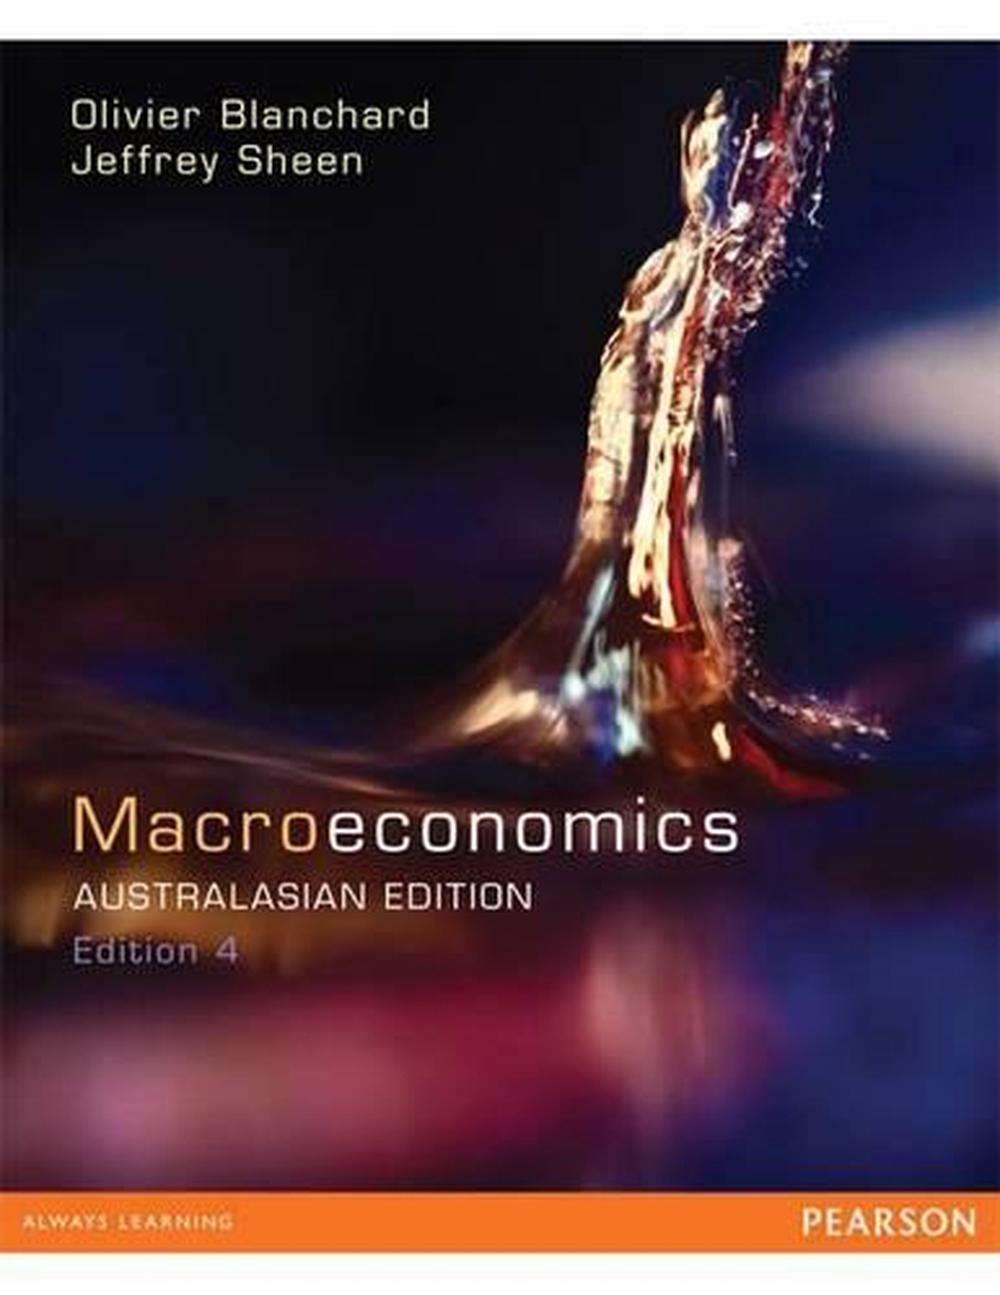 Macroeconomics Australasian Edition 4th Edition by Olivier Blanchard